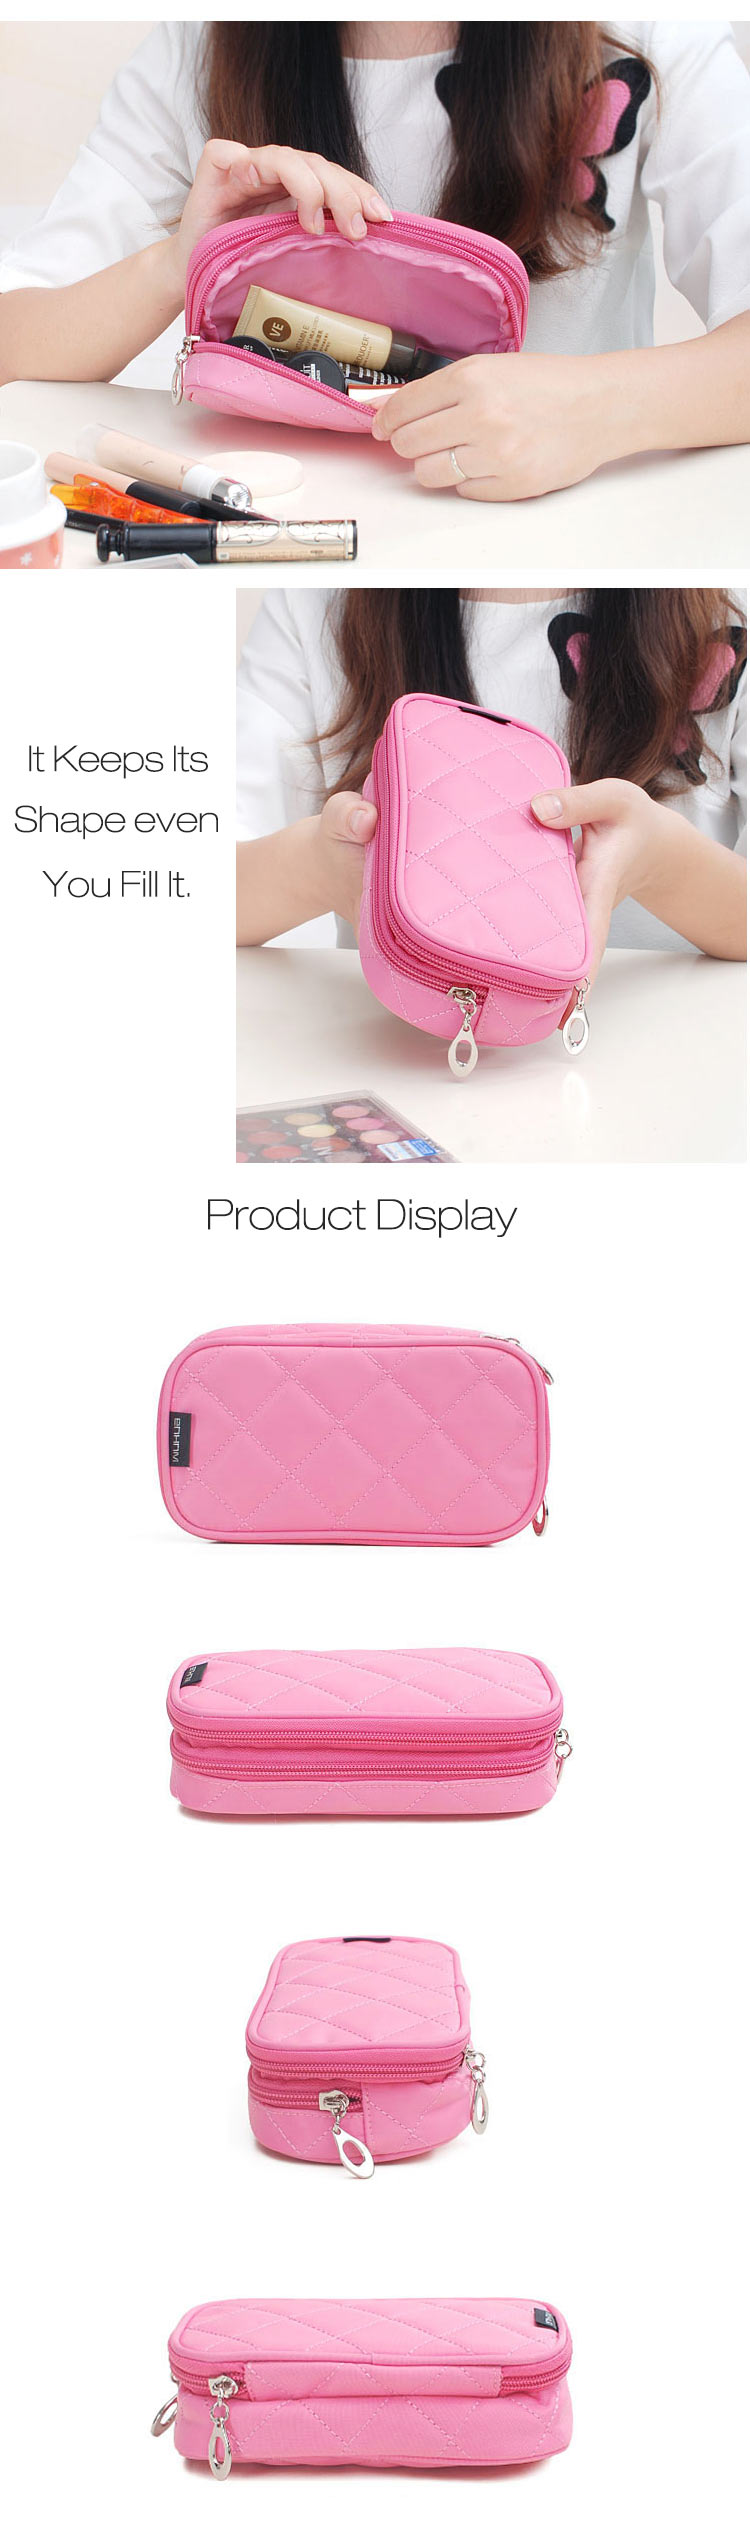 Honana-HN-B56-Portable-2-Layers-Travel-Storage-Bag-Colorful-Cosmetic-Makeup-Organizer-Toiletry-Stora-1163619